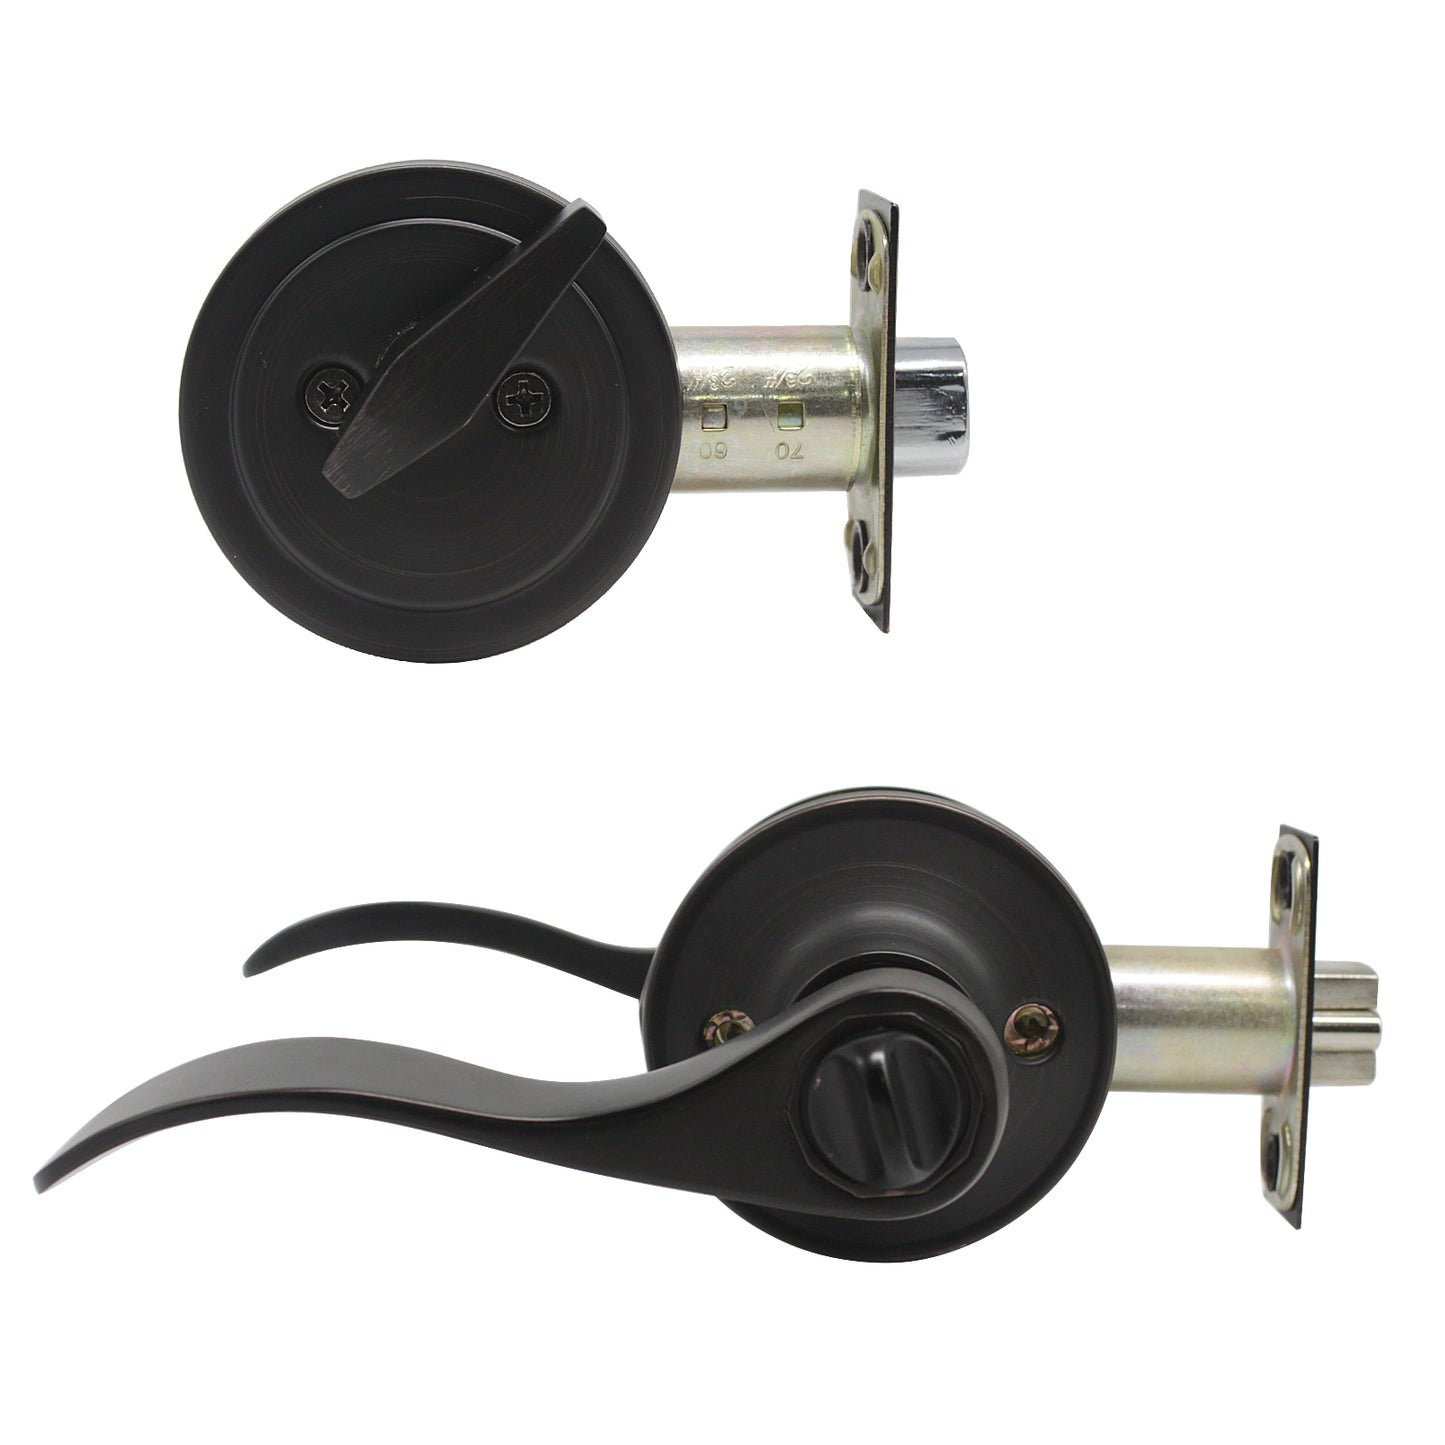 Keyed Entry Leverset Lock with Single Cylinder Deadbolt Oil Rubbed Bronze Finish Combo Packs - Keyed Alike DL12061ET-101ORB - Probrico